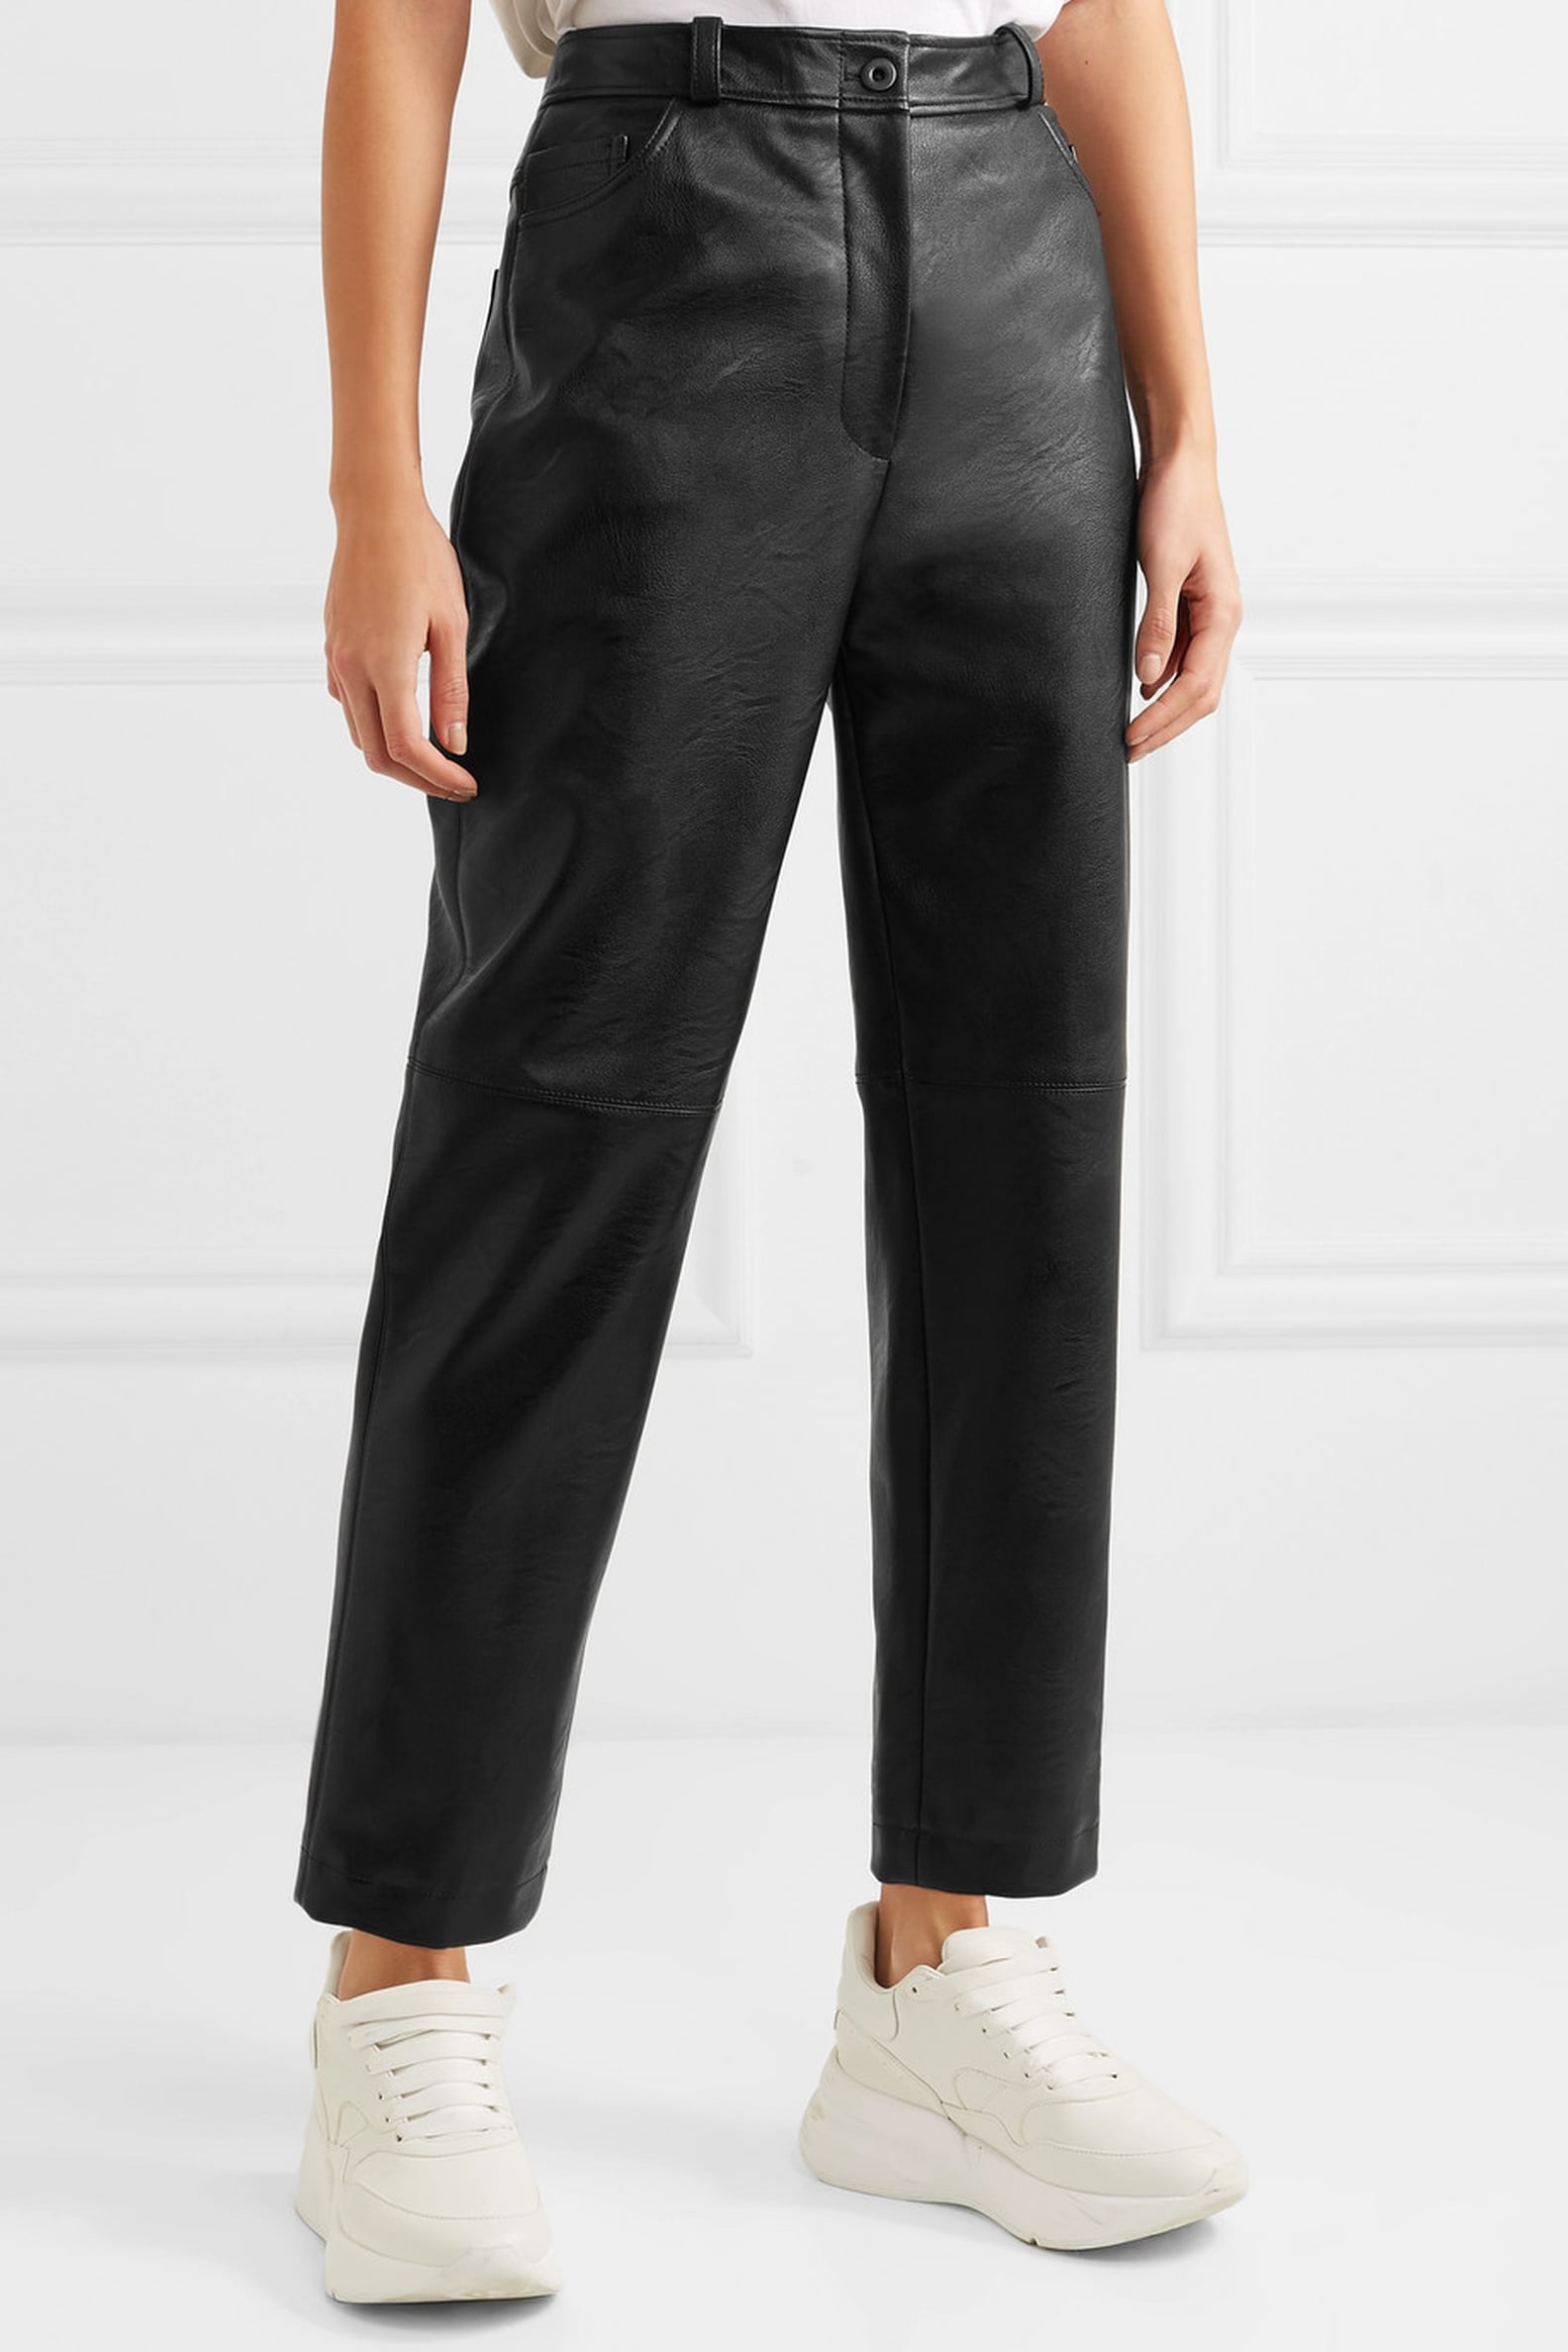 Leather Pants Outfit Ideas | POPSUGAR Fashion